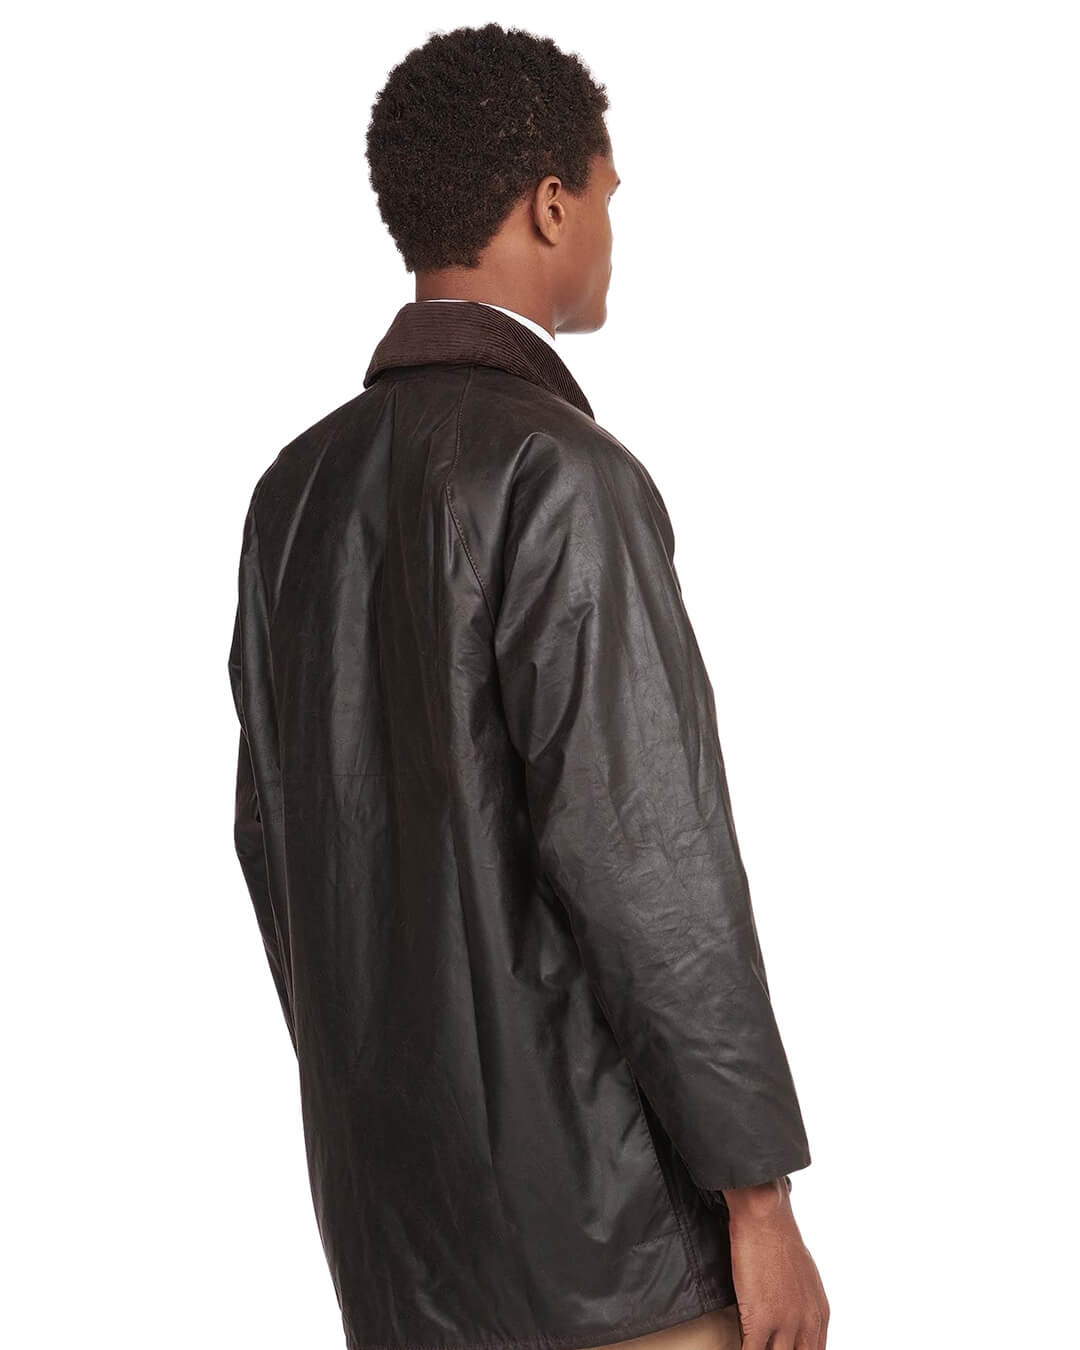 Barbour Outerwear Barbour Beaufort® Brown Wax Jacket